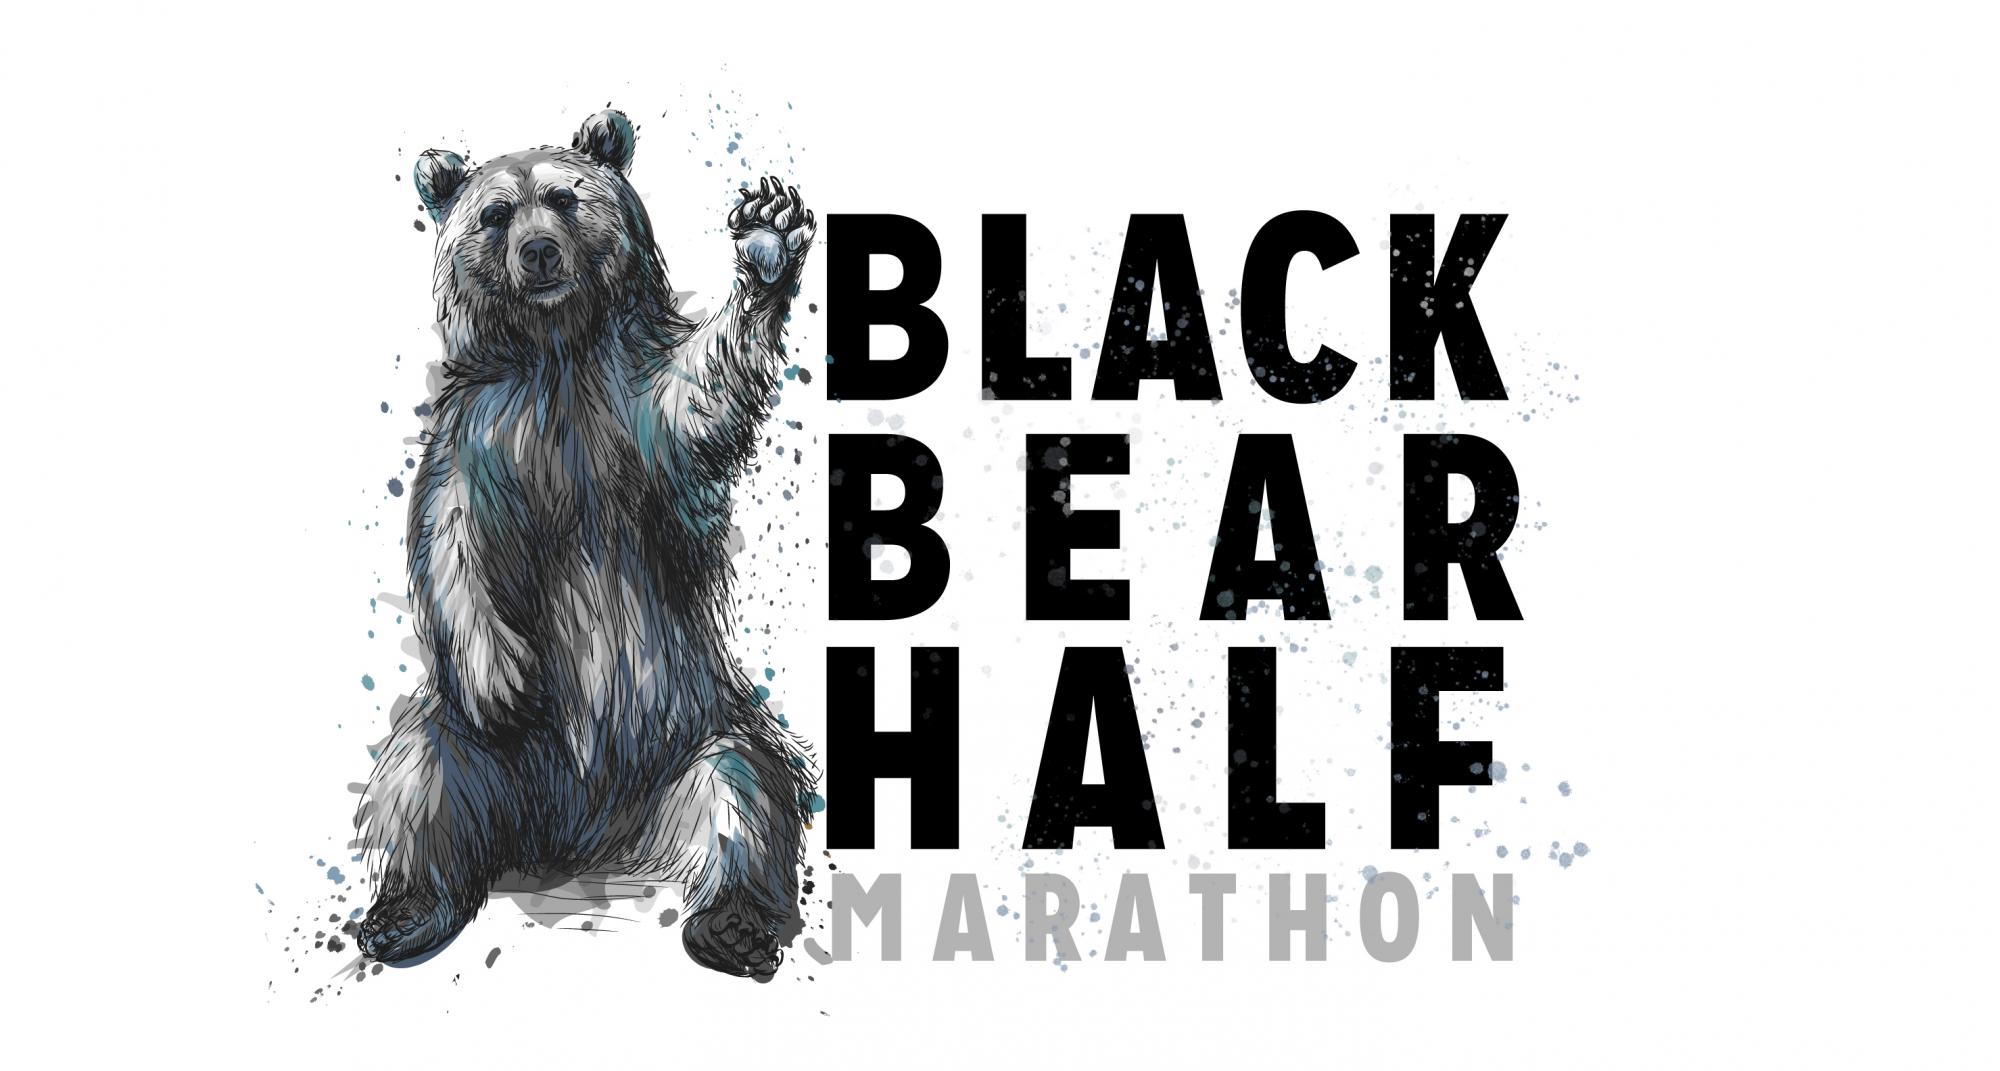 Painted black bear sitting next to the words "Black Bear Half Marathon" 